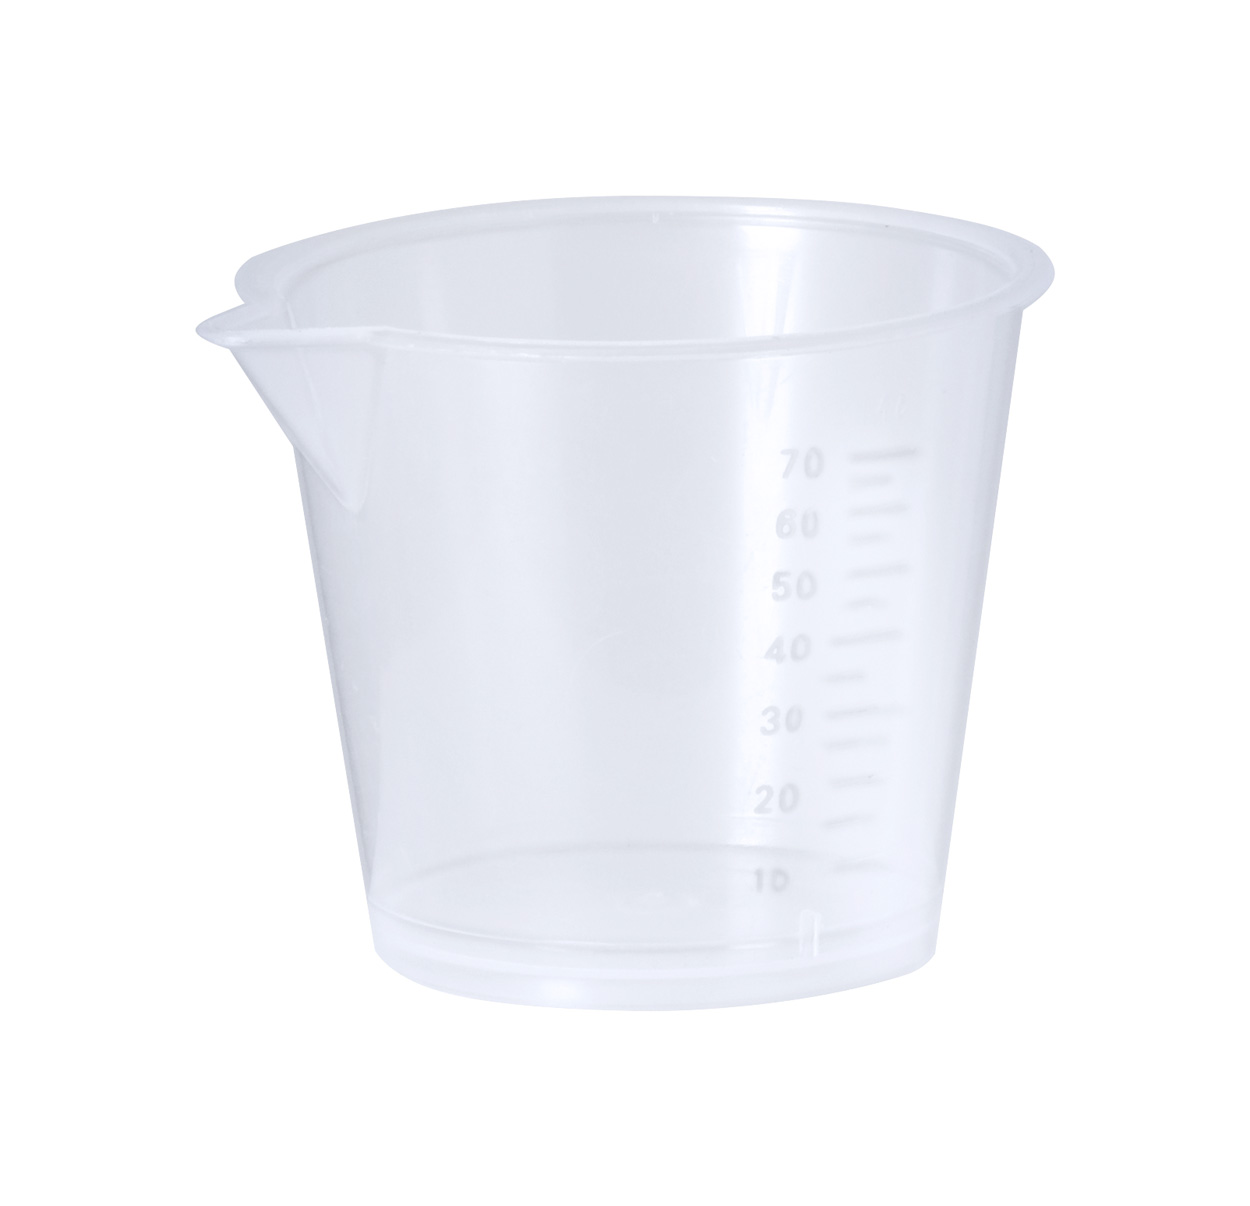 Roswal measuring cup - transparent